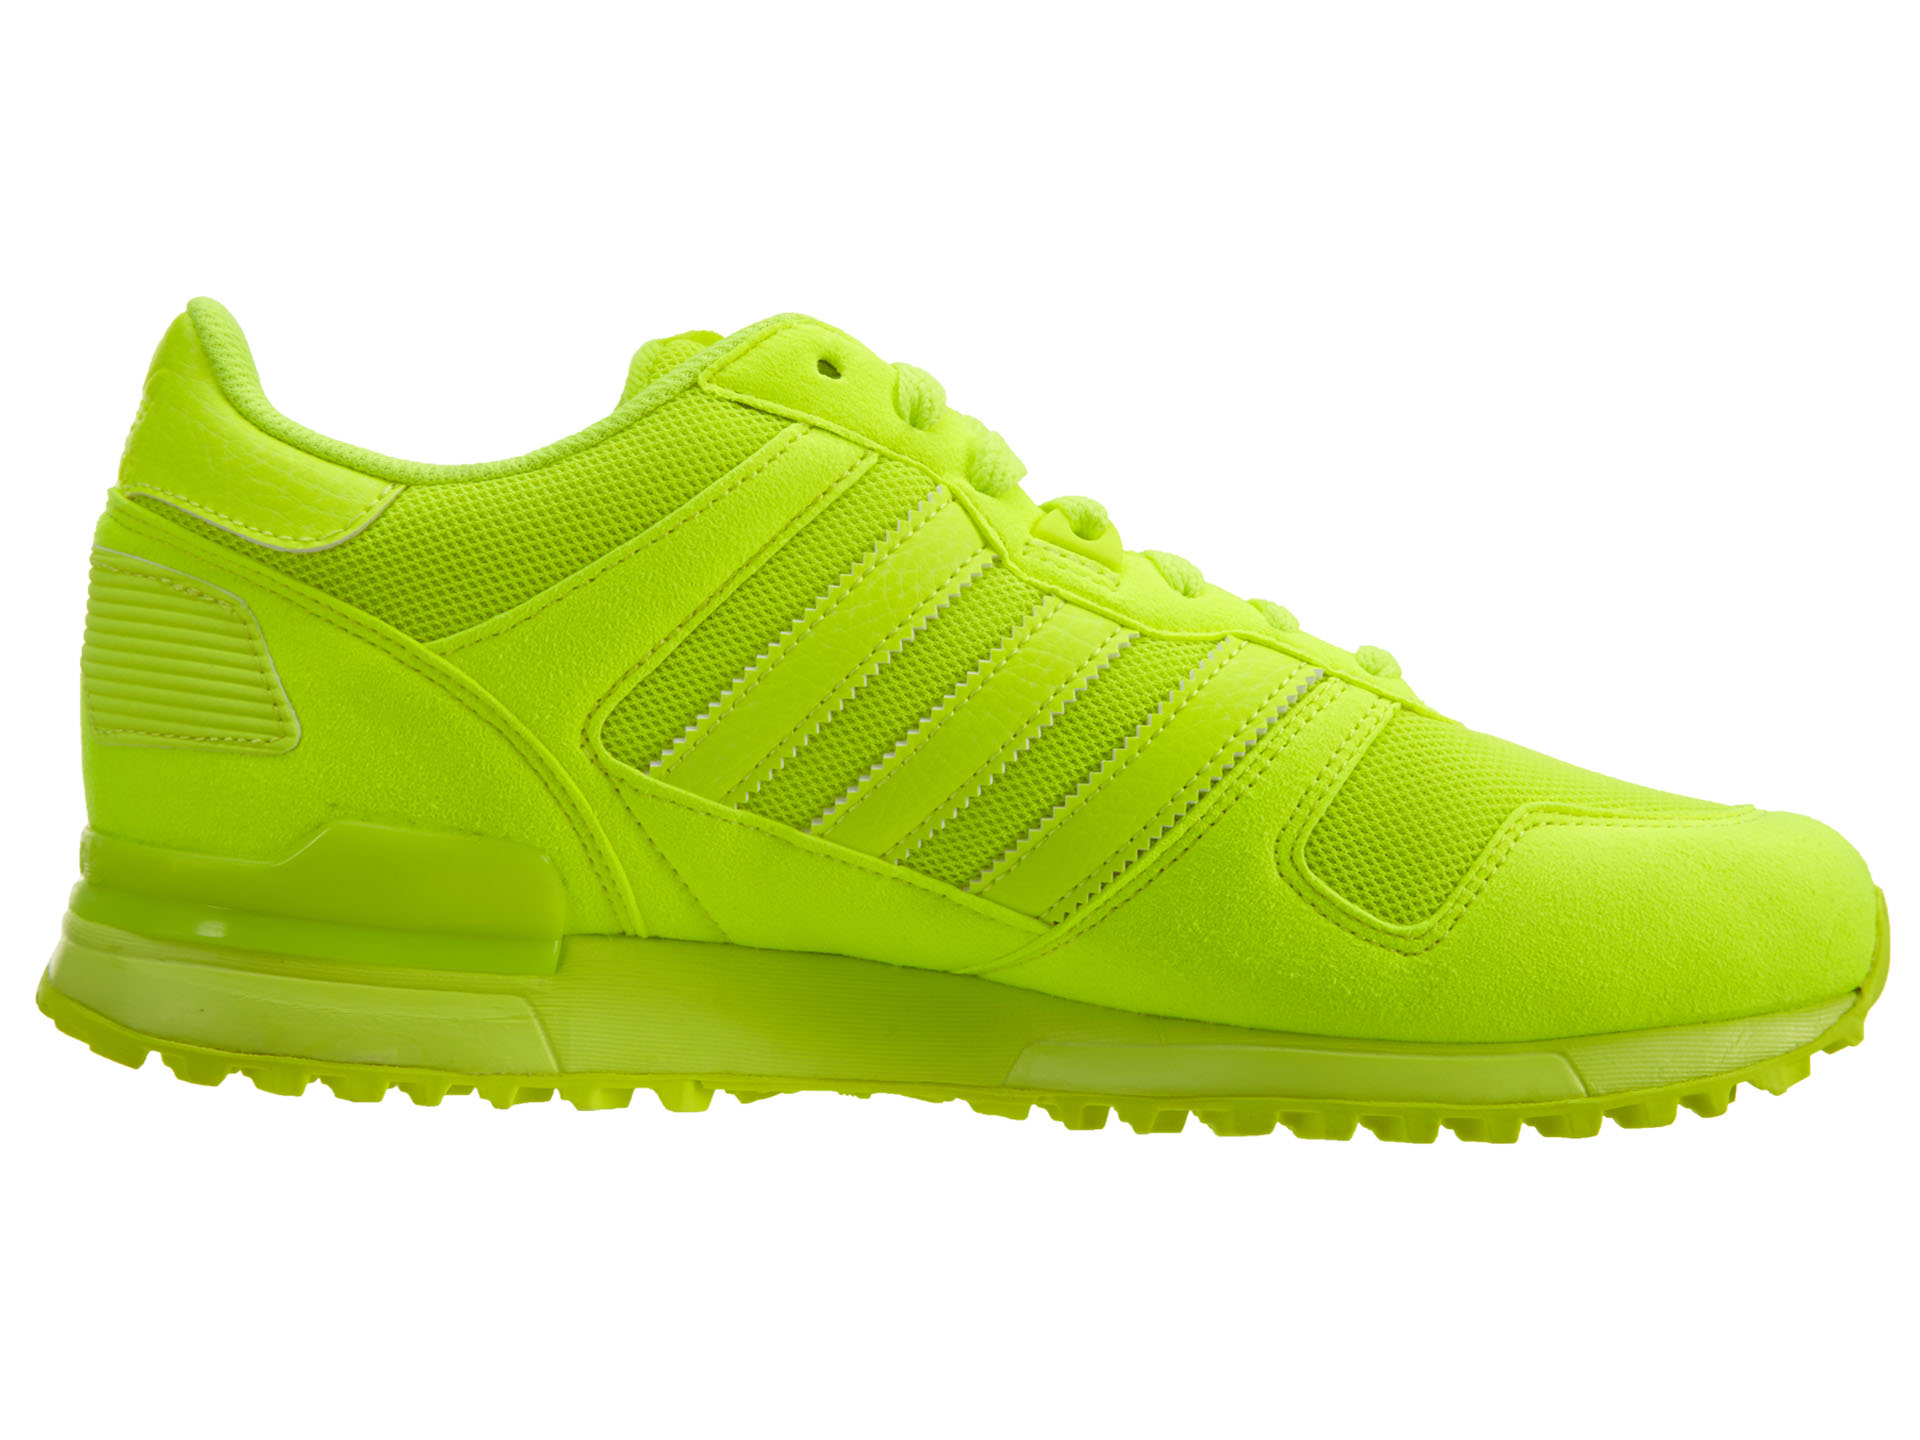 adidas zx 700 green yellow